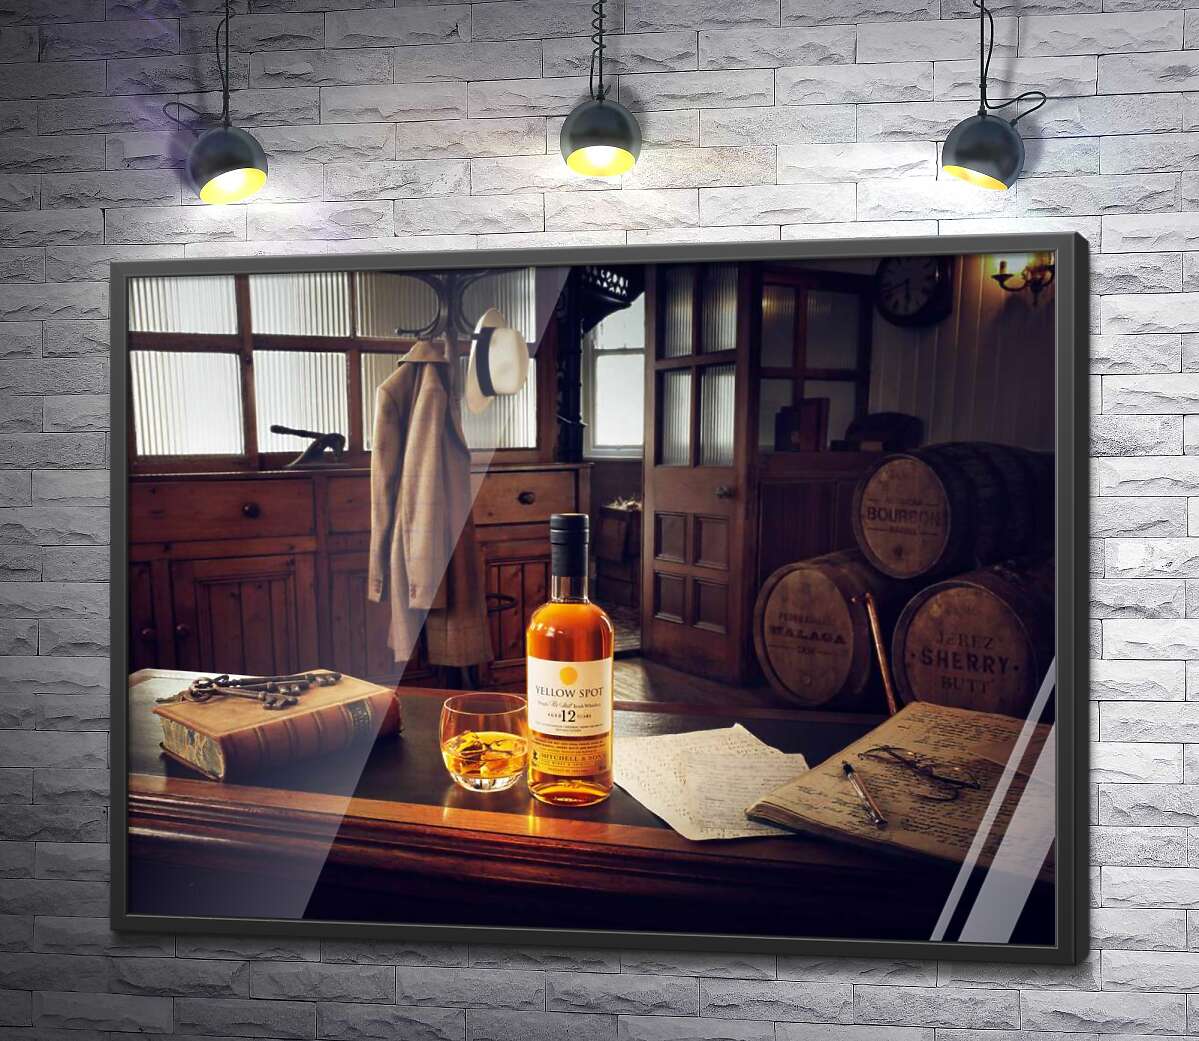 постер Бутылка ирландского брендового виски "Yellow Spot" в атмосферной комнате 20 века